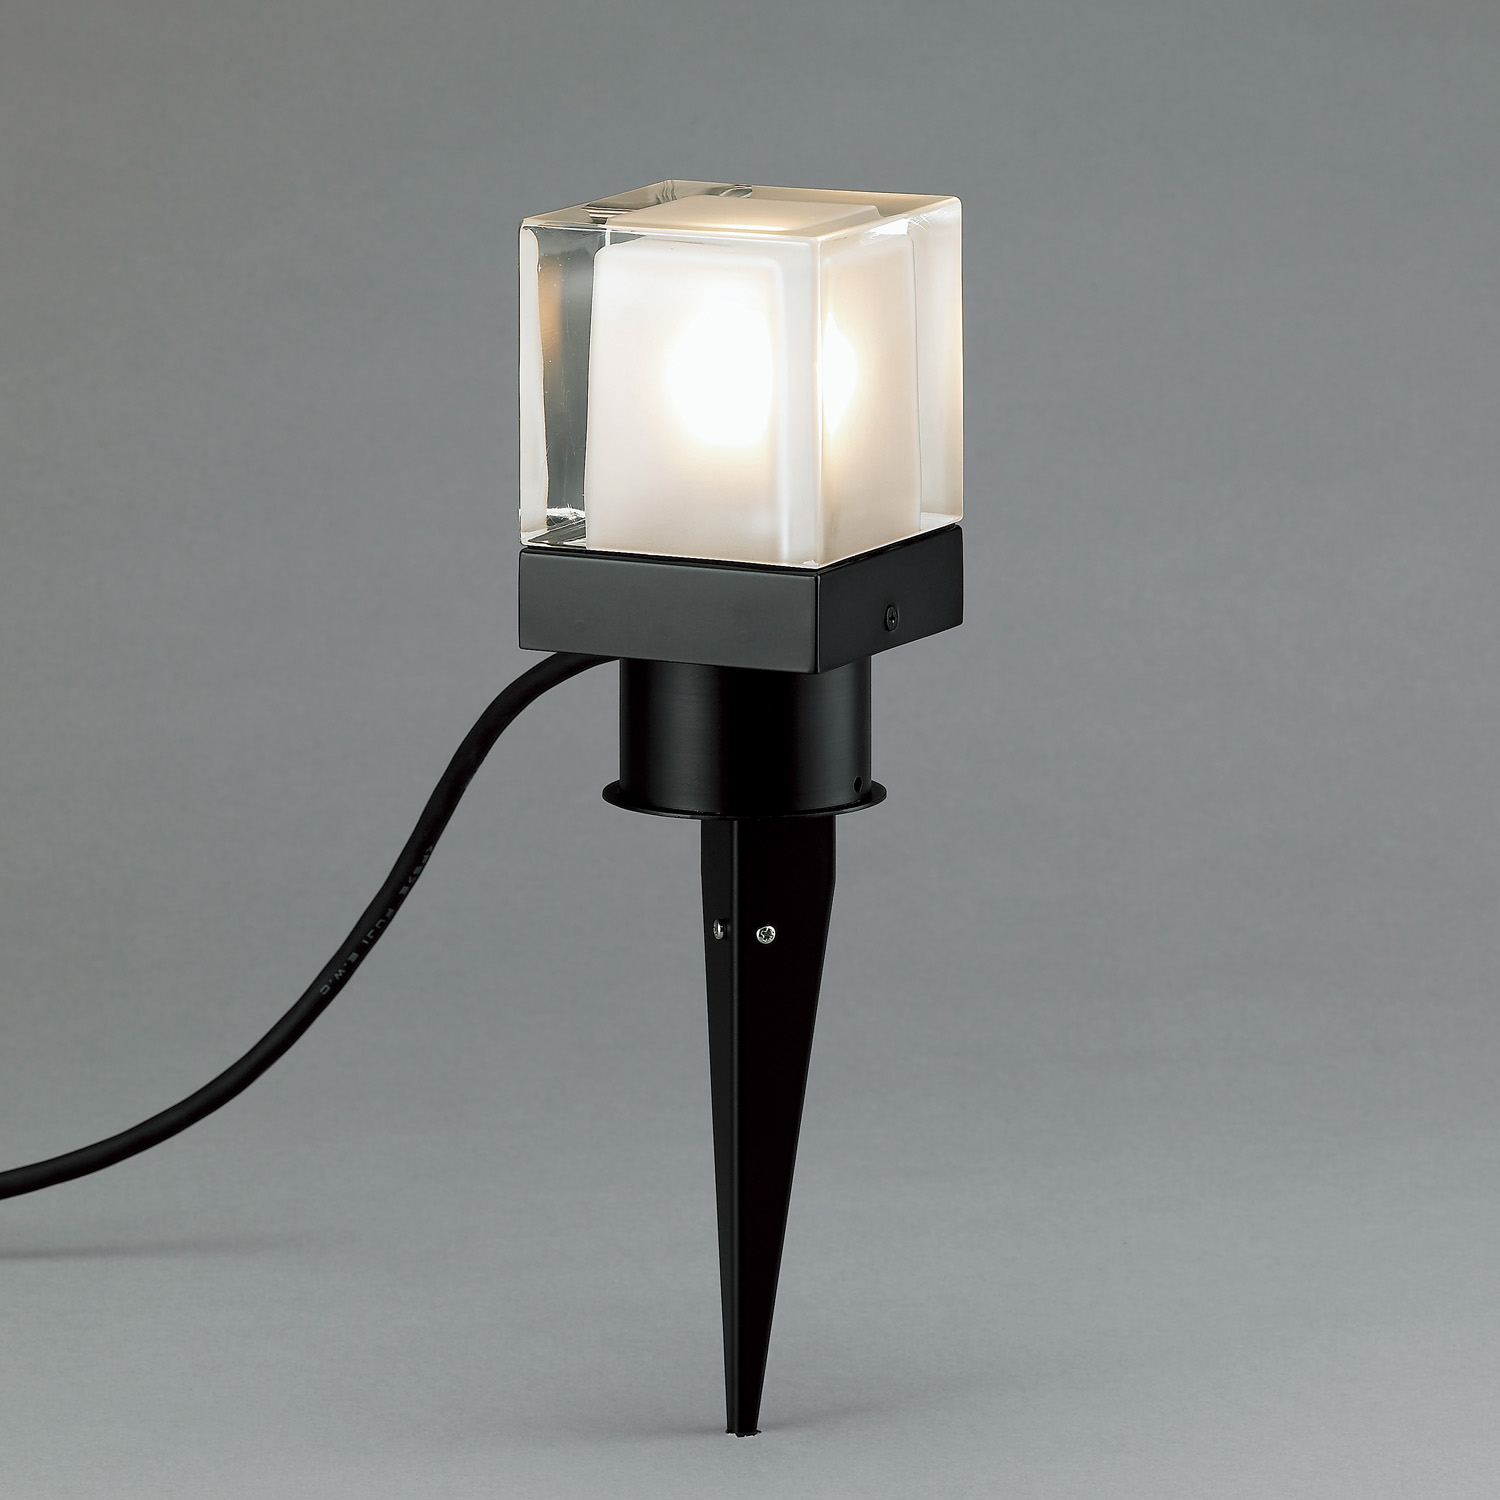 AD-2989-L 山田照明 ガーデンライト ダークグレーメタリック LED - 1